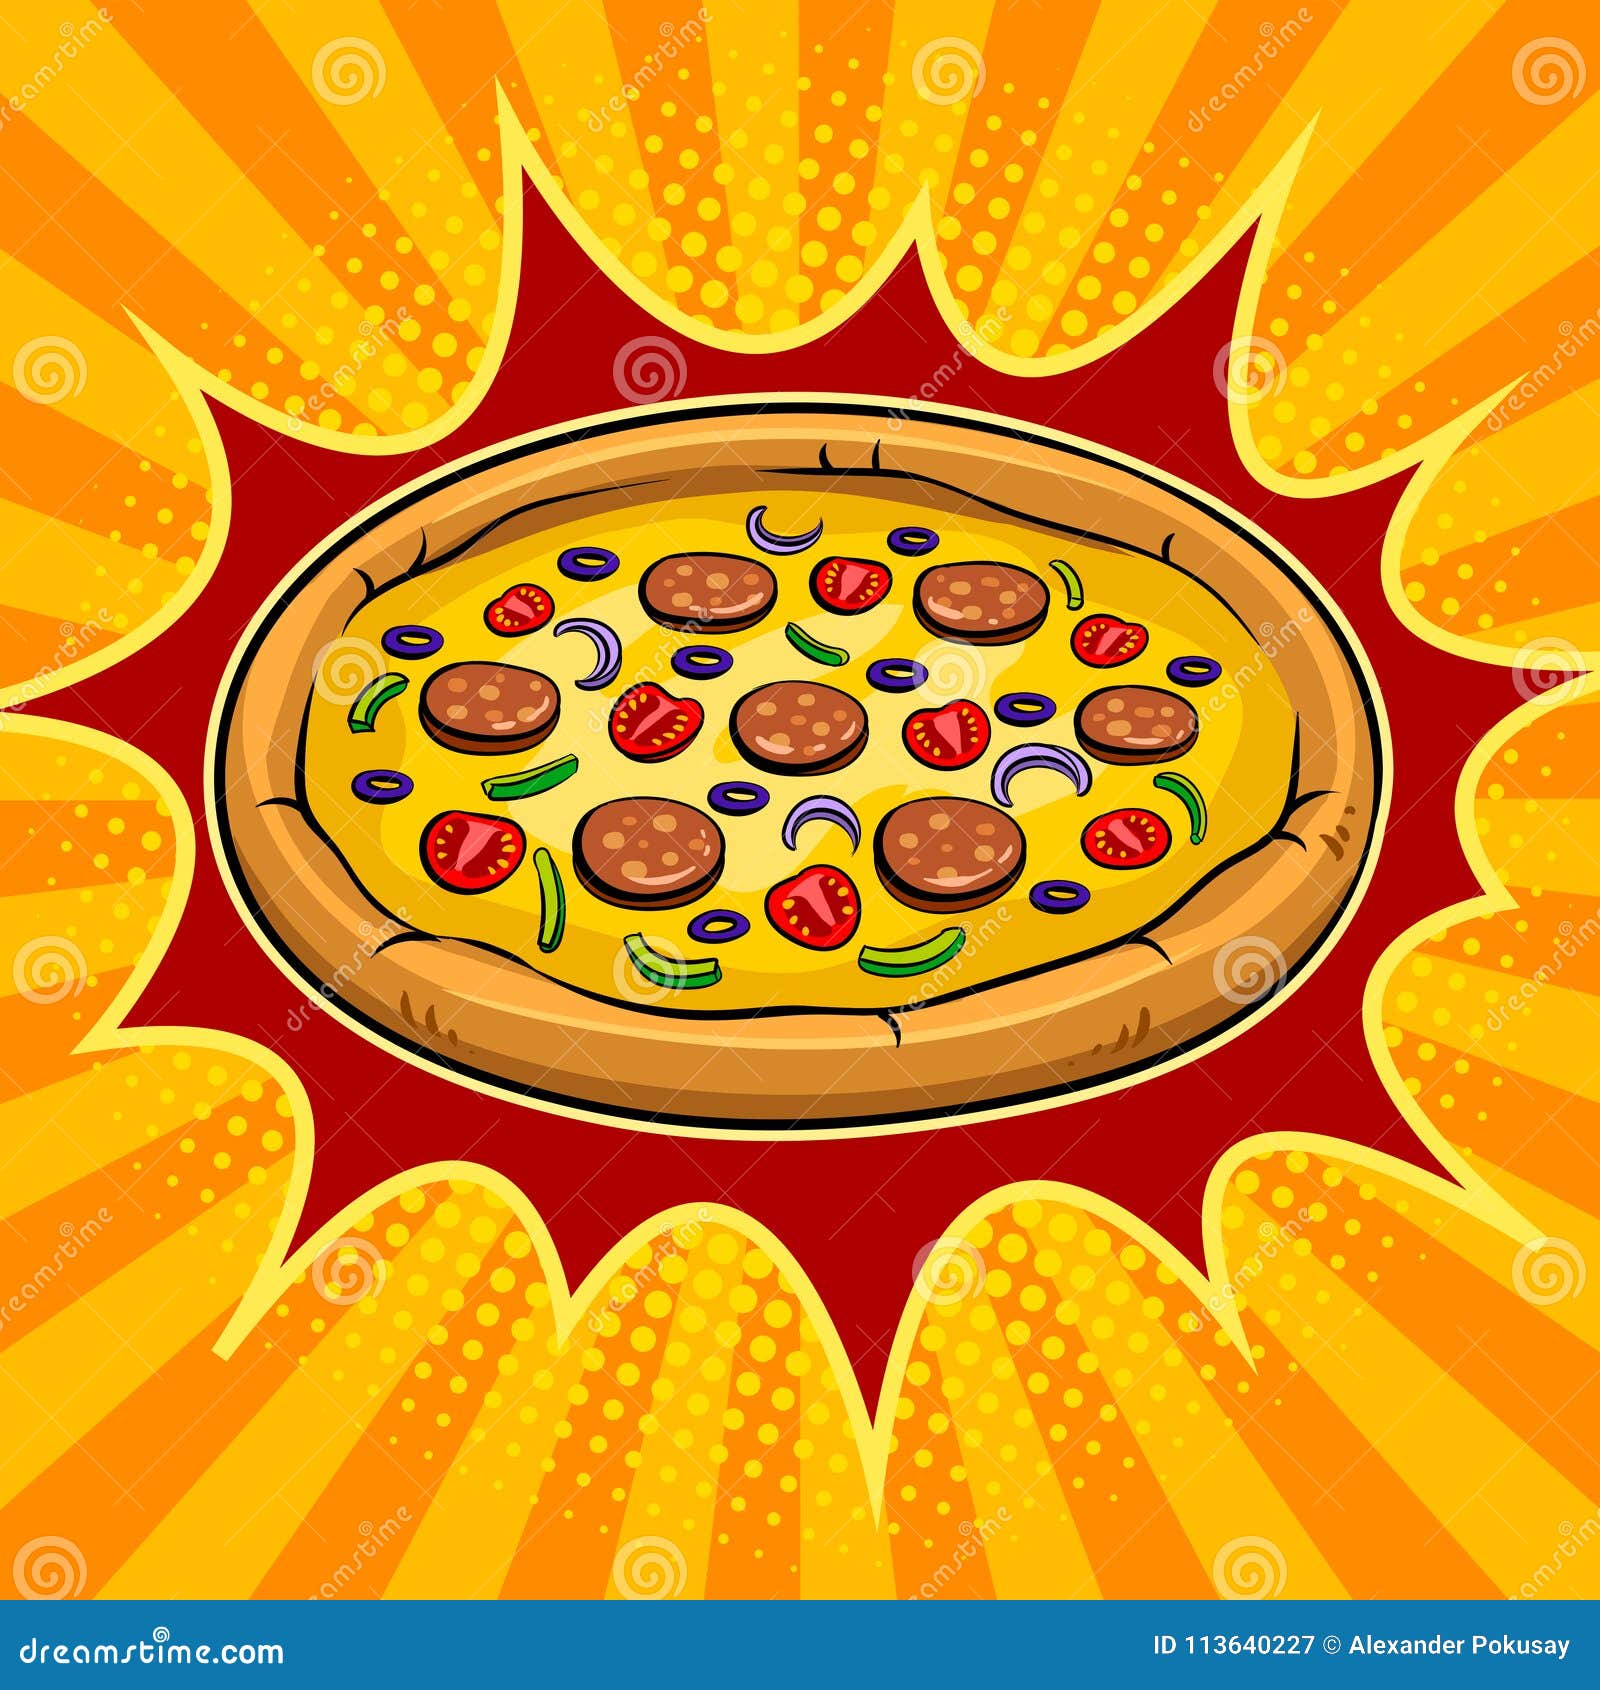 Pizza Pop Vector Stock Vector - Illustration of vintage, 113640227